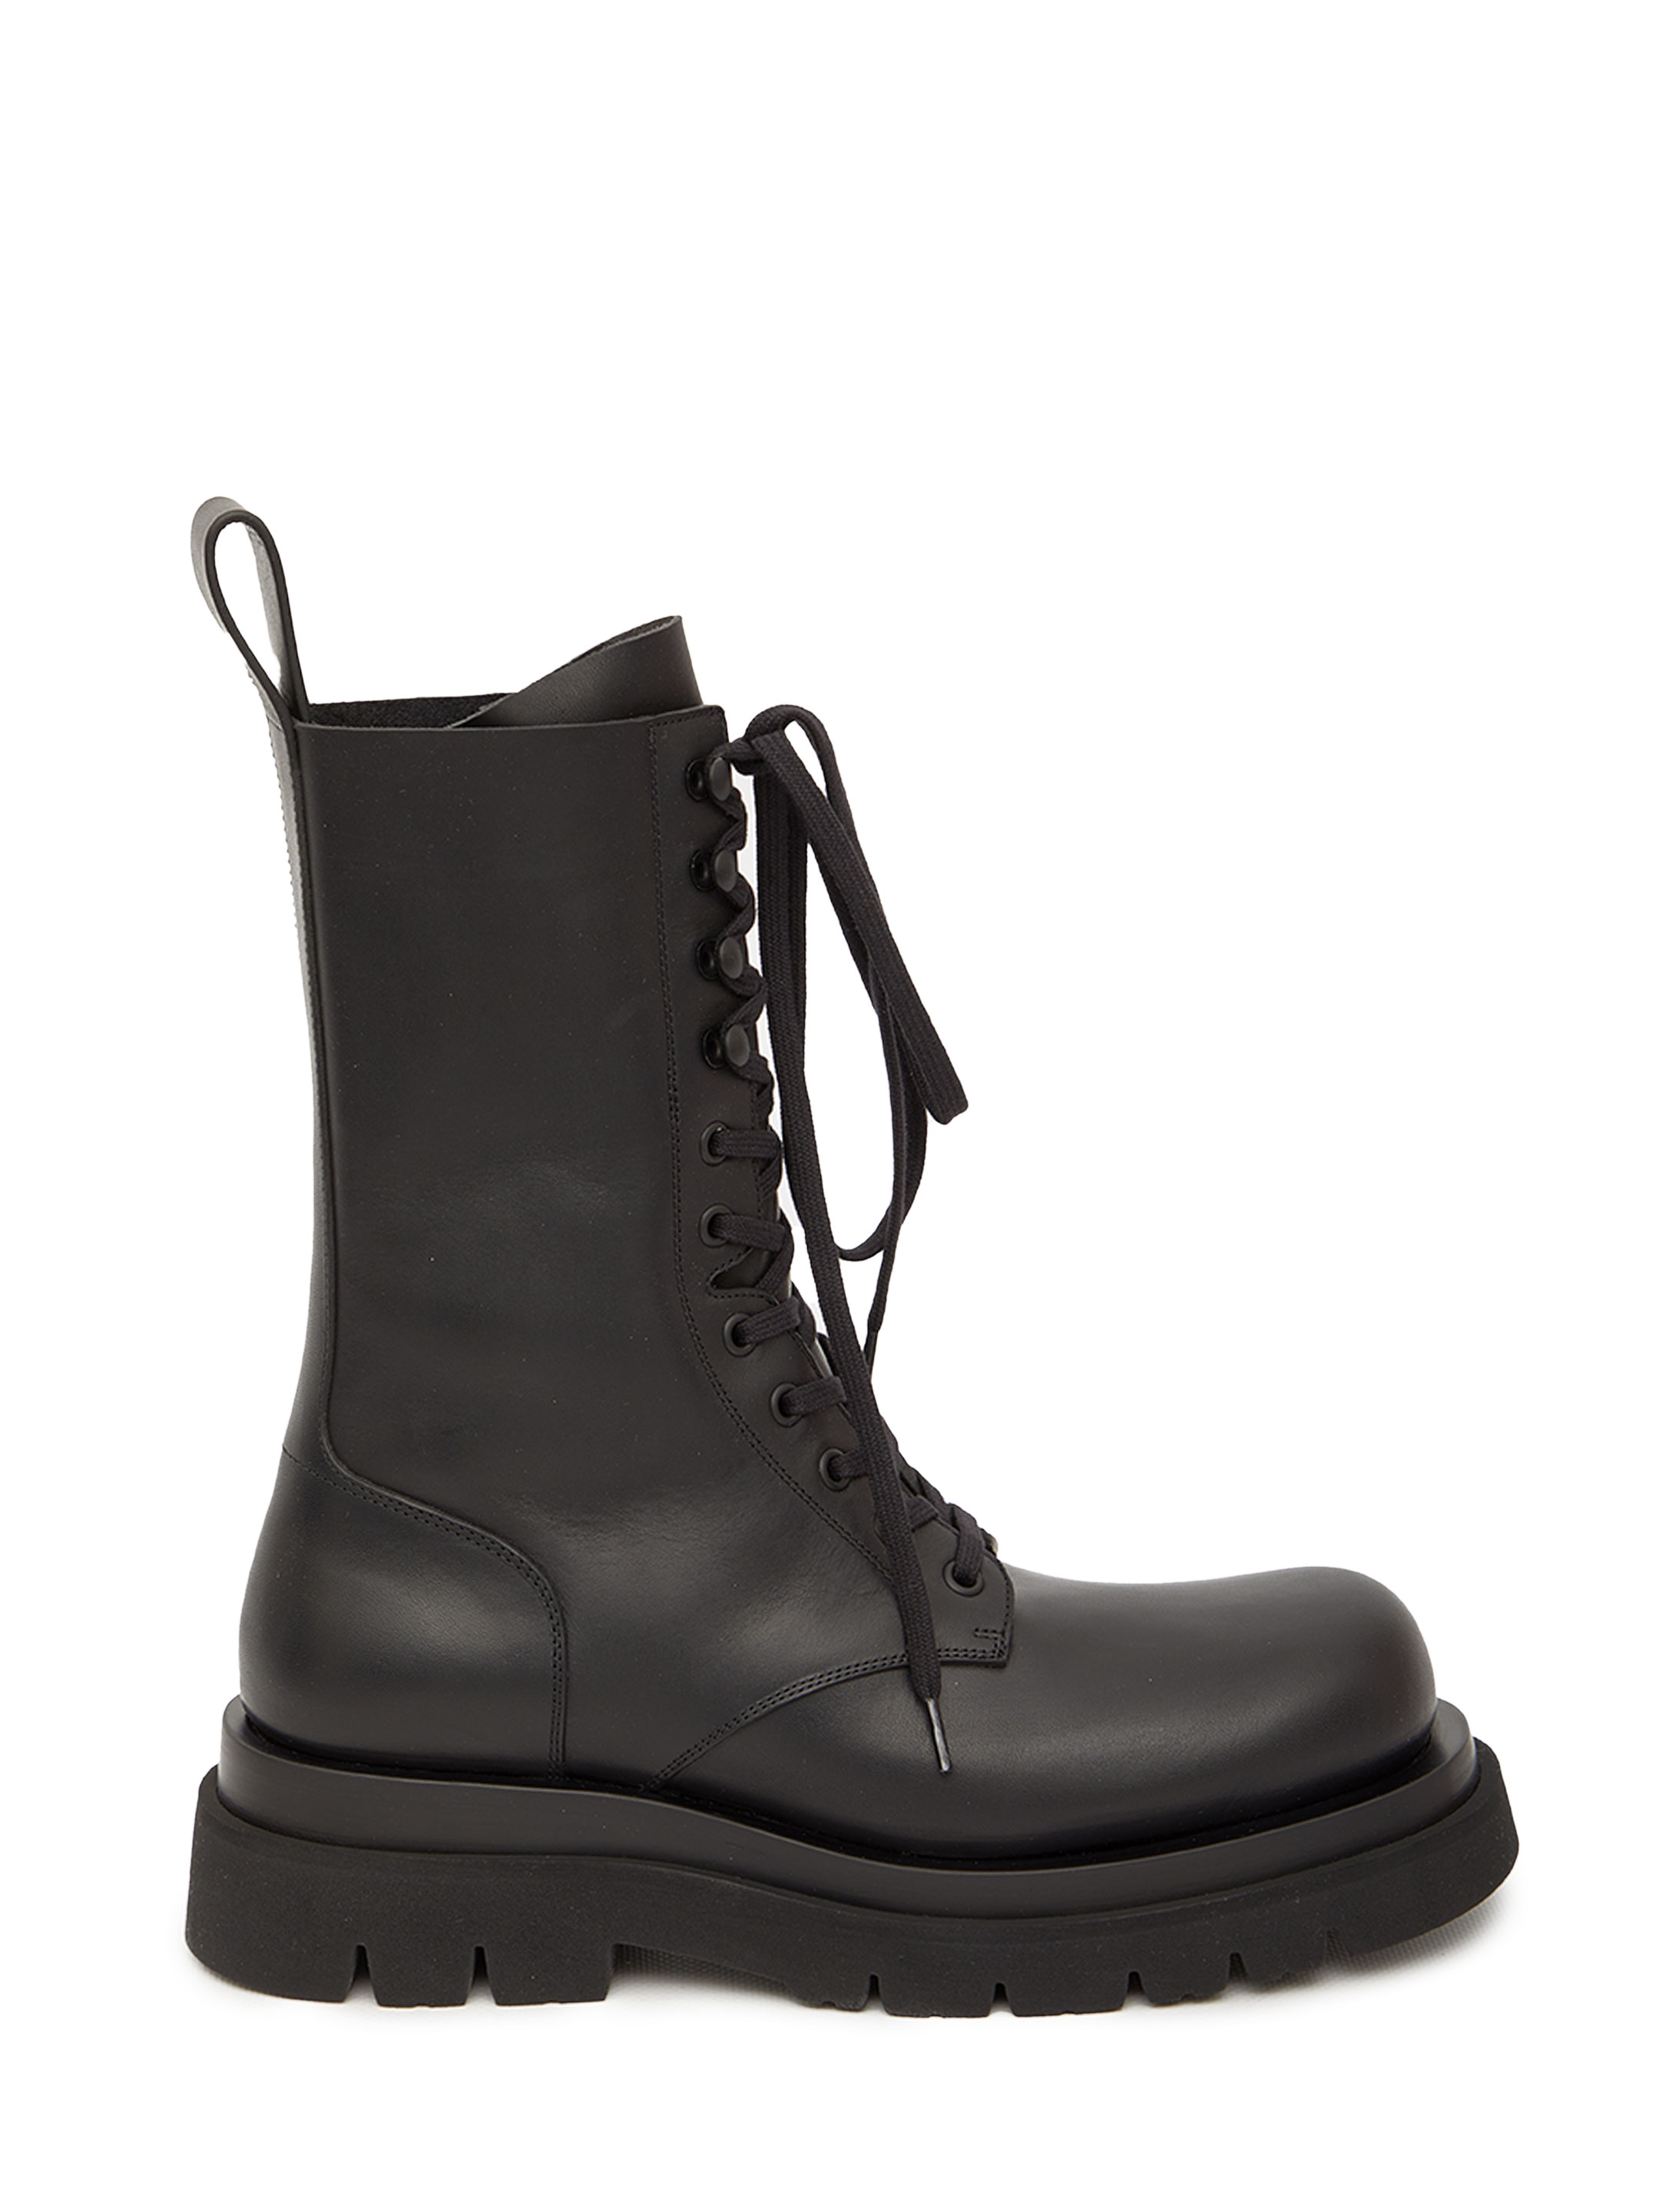 Ботинки Bottega Veneta Lug lace-up, черный ботинки bottega veneta lug chelsea boots черный